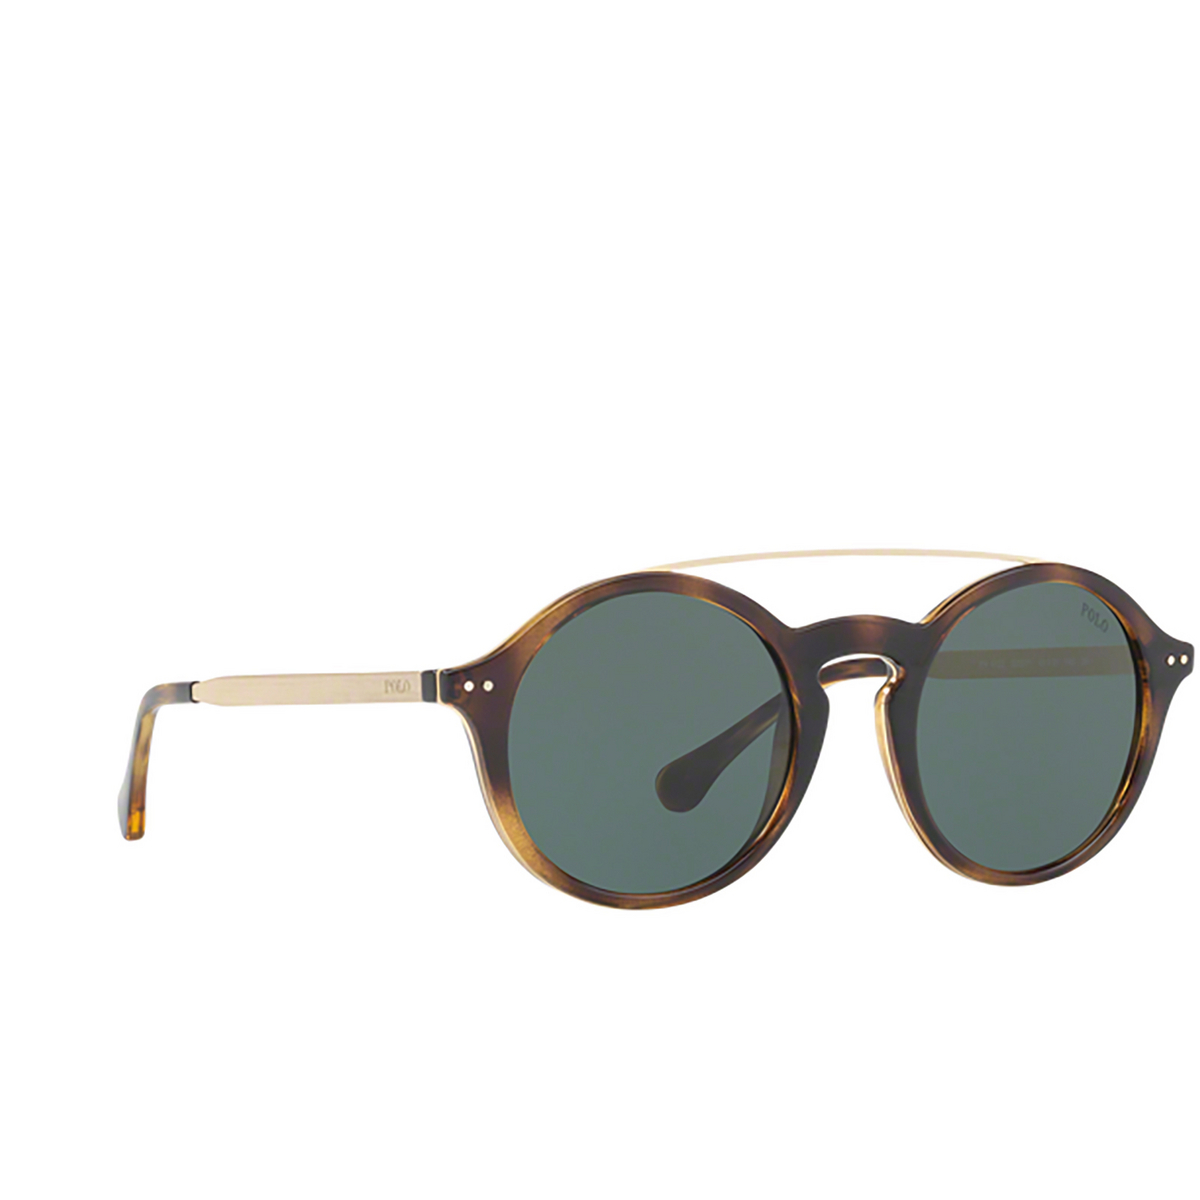 Polo Ralph Lauren® Round Sunglasses: PH4122 color 500371 - three-quarters view.